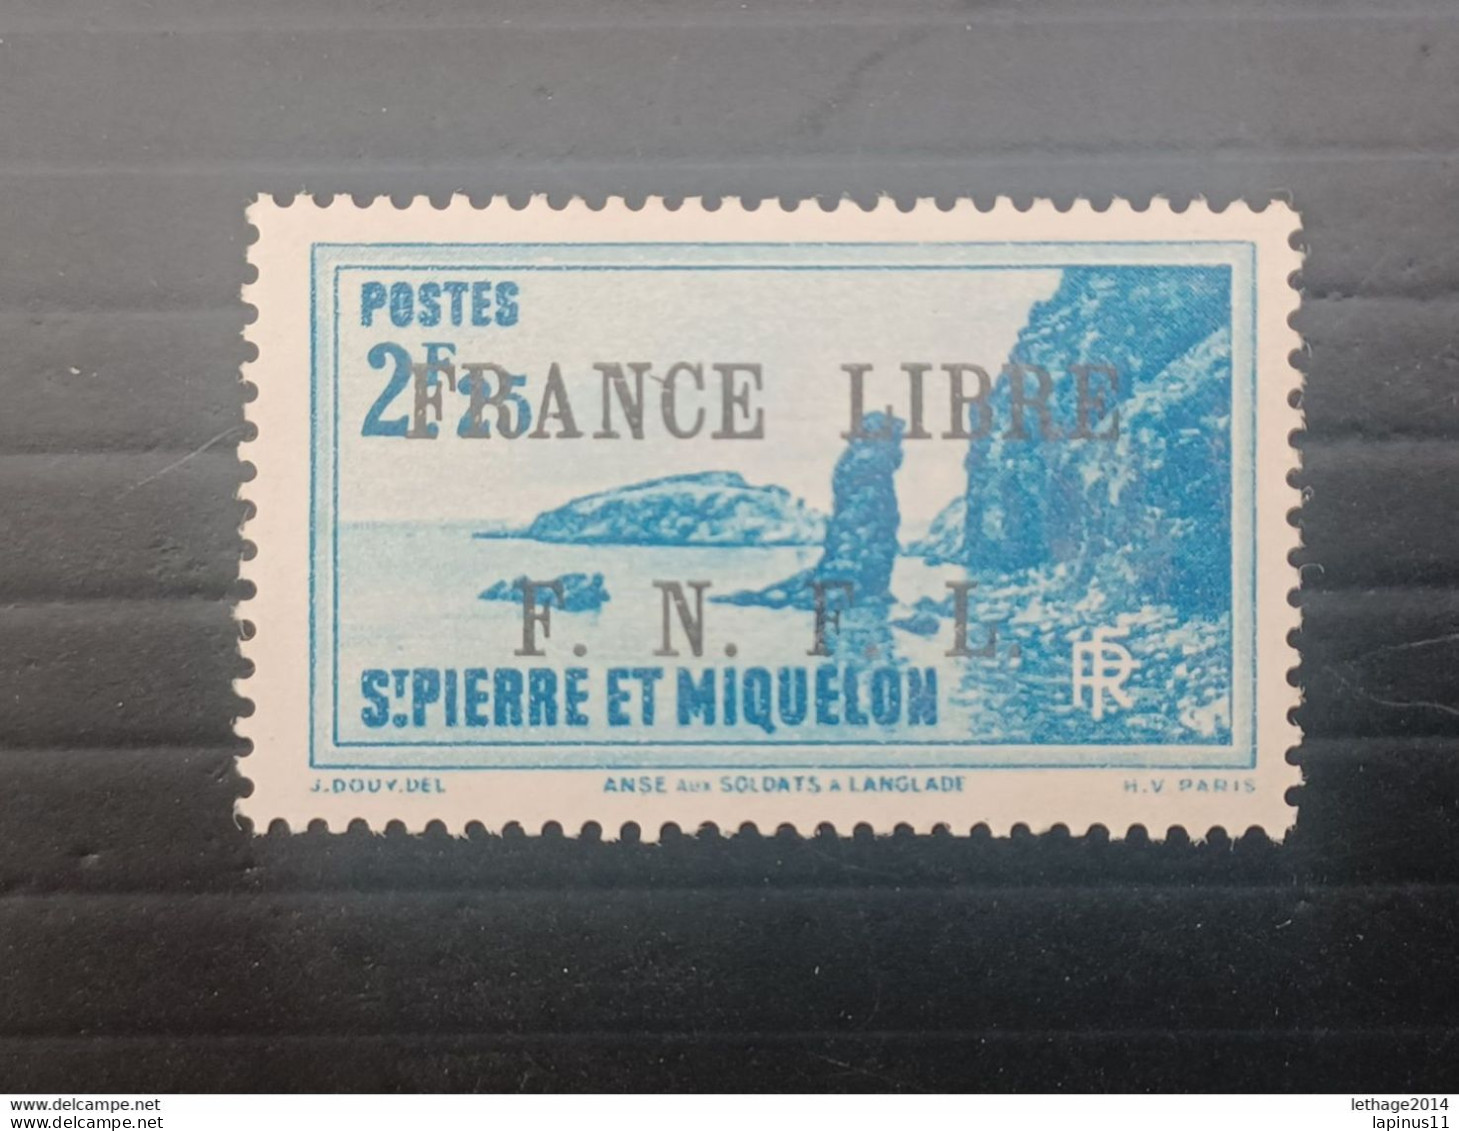 ST PIERRE ET MIQUELLON 1941 STAMPS OF 1922 OVERPRINT FRANCE LIBRE F N F L CAT. YVERT N. 269 MNG - Ungebraucht